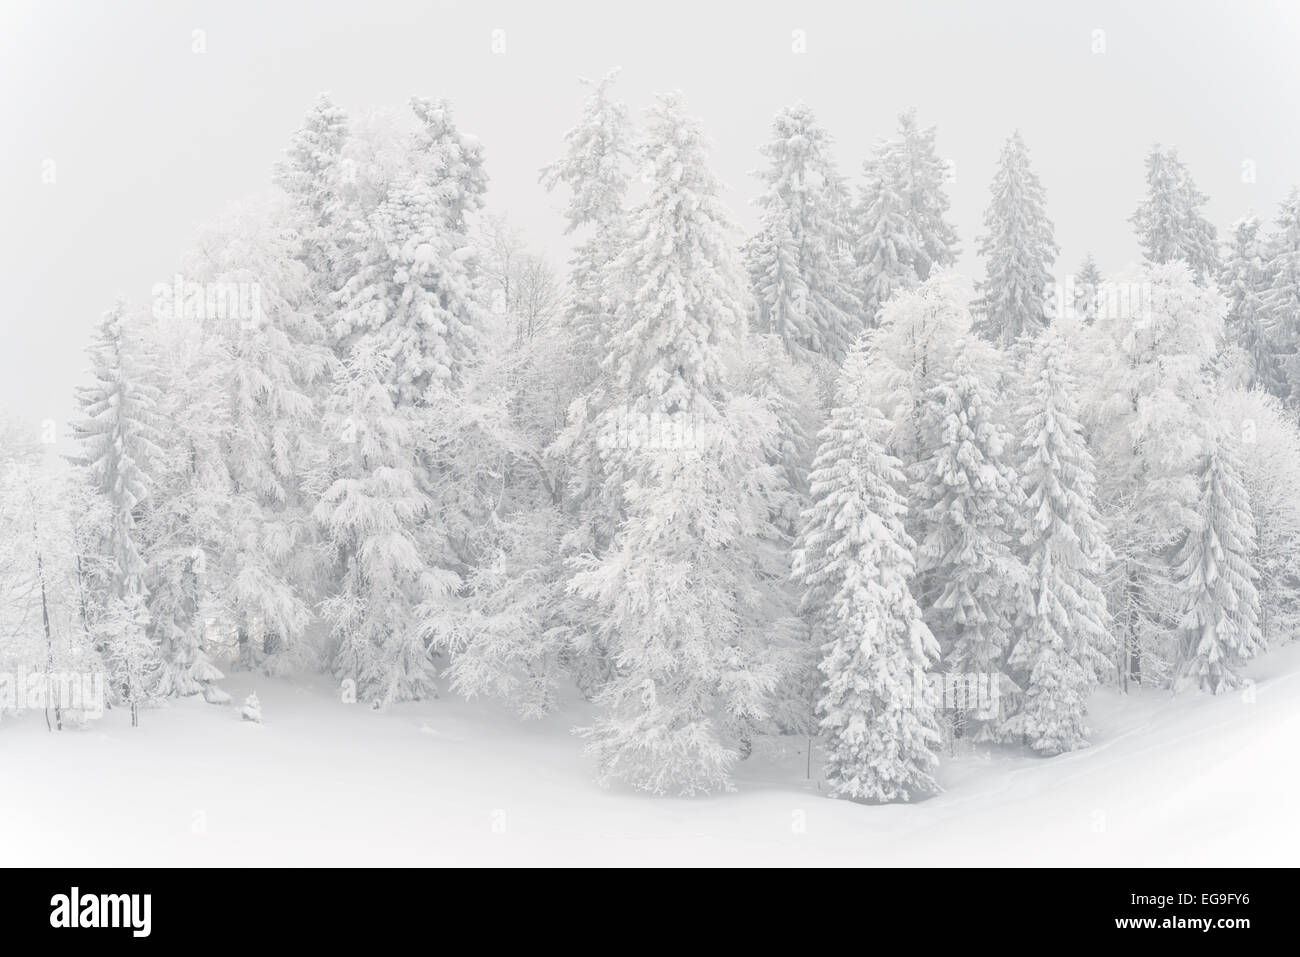 Switzerland, St gallen Cantonwhite, Snow covered trees in winter Stock Photo